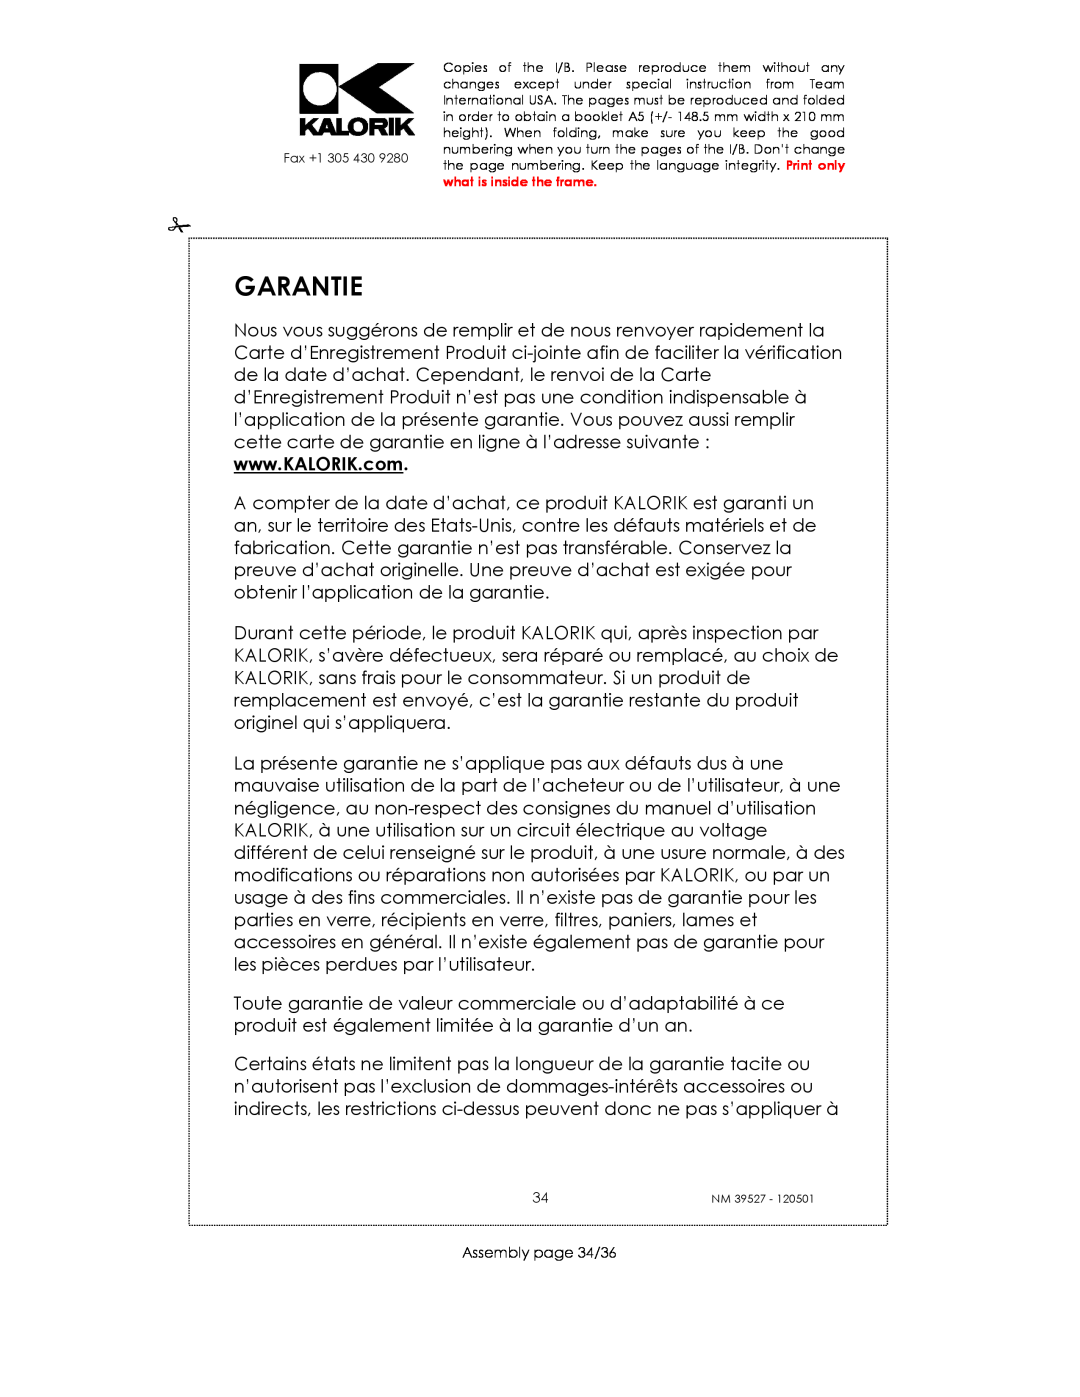 Kalorik NM 39527 manual Garantie, Assembly page 34/36 